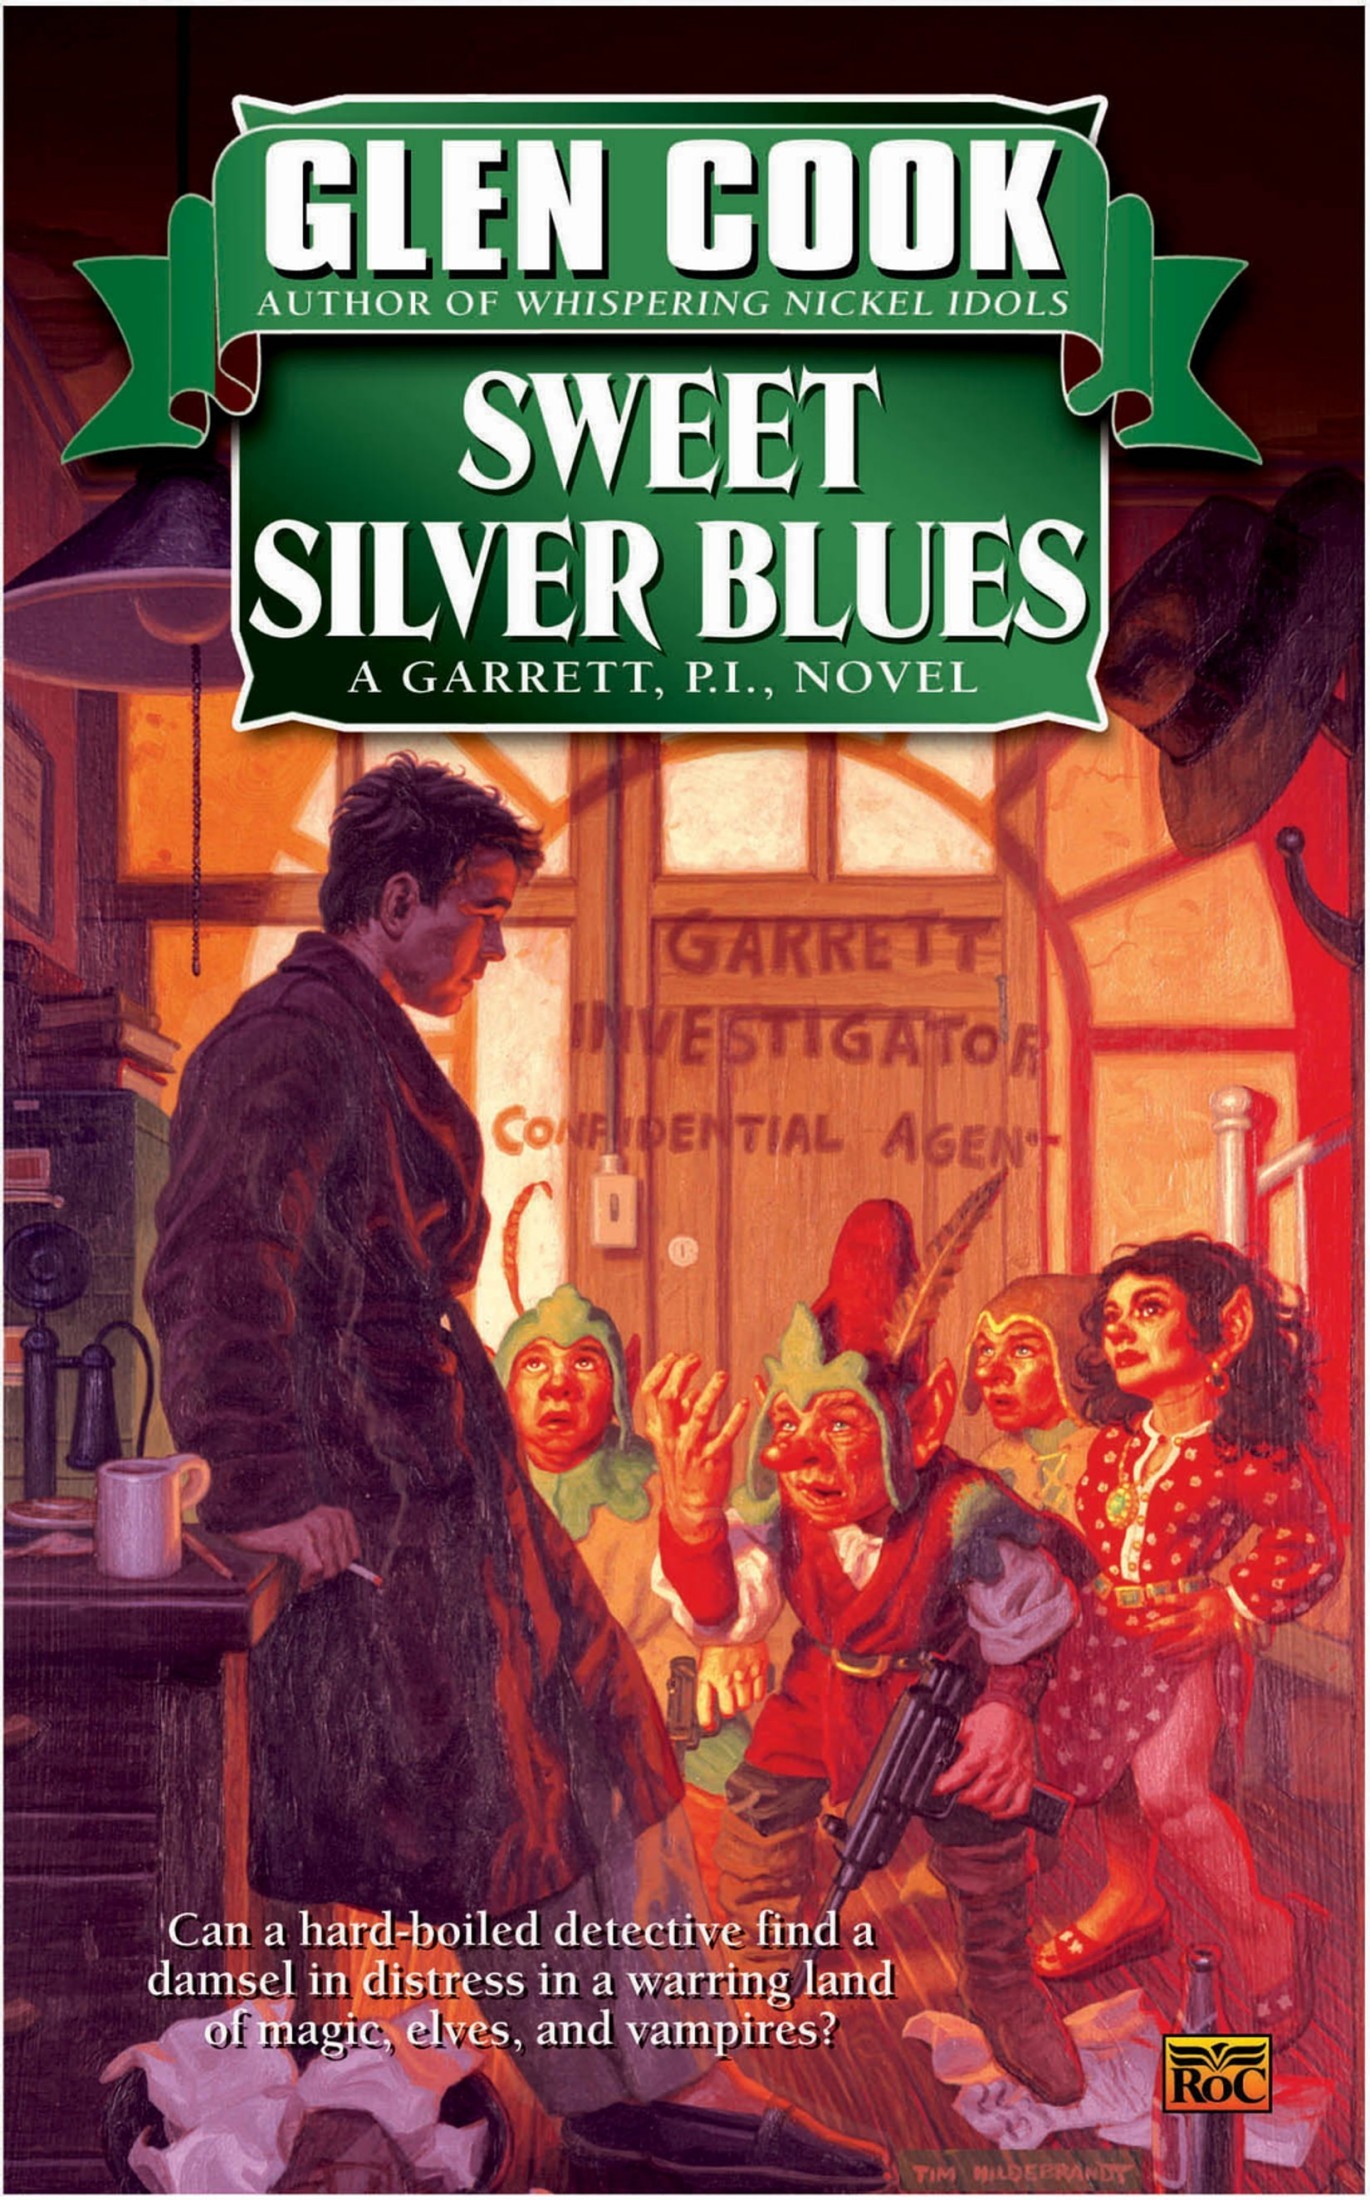 Sweet Silver Blues (Garrett Files) (1990, Roc)